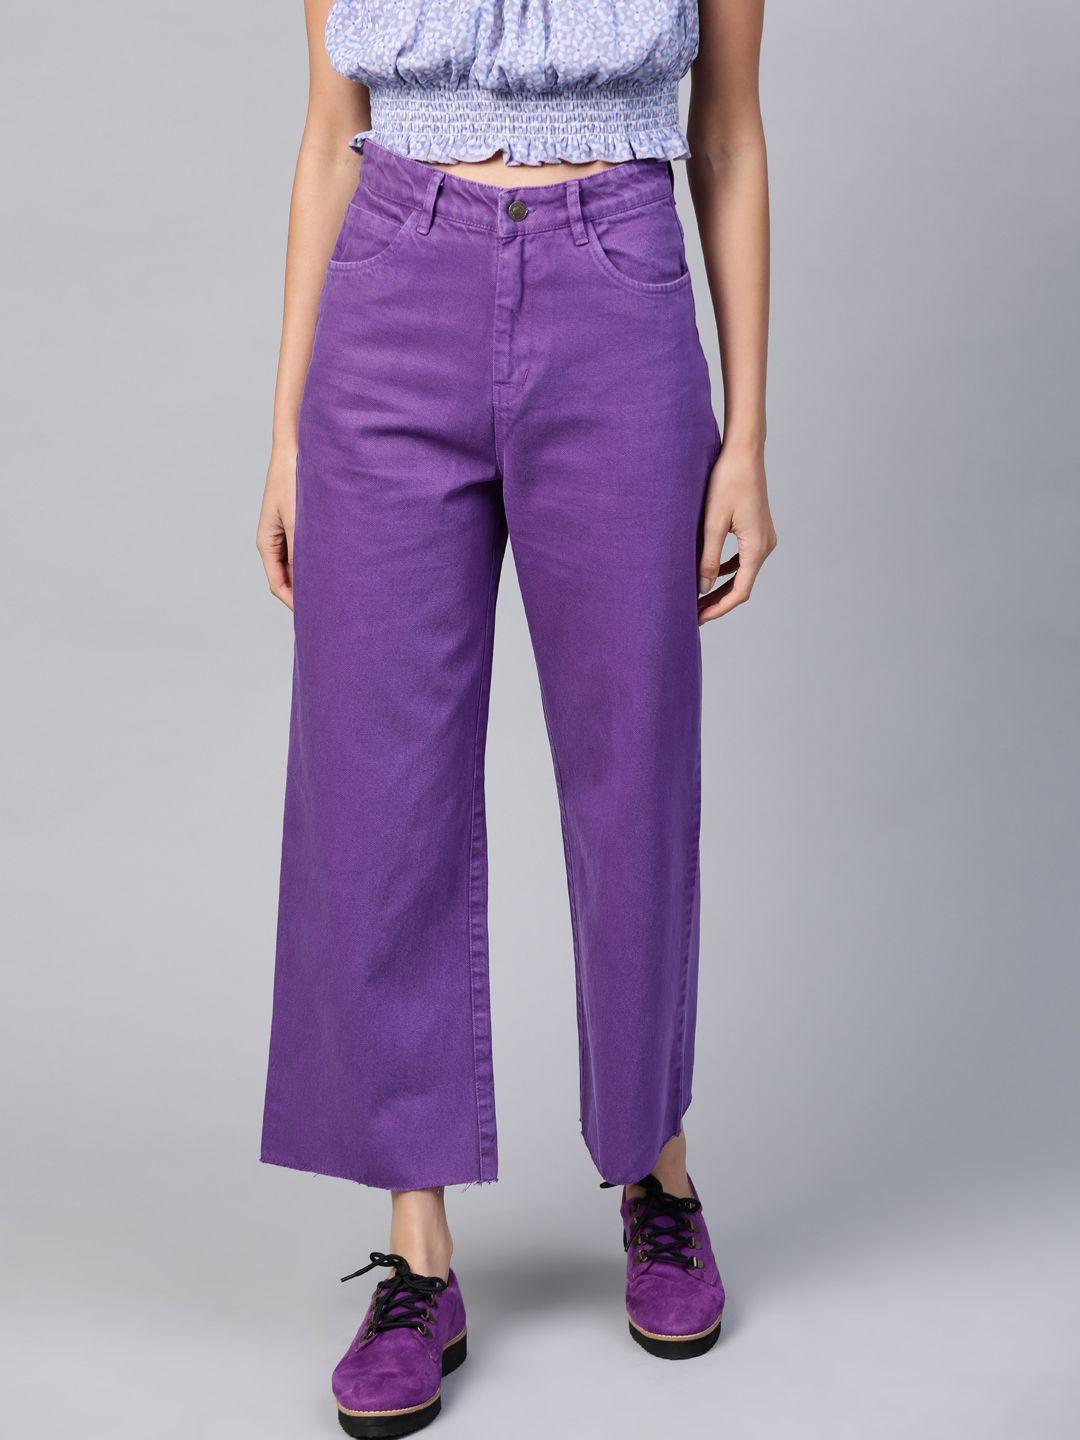 sassafras women purple relaxed fit high-rise jeans